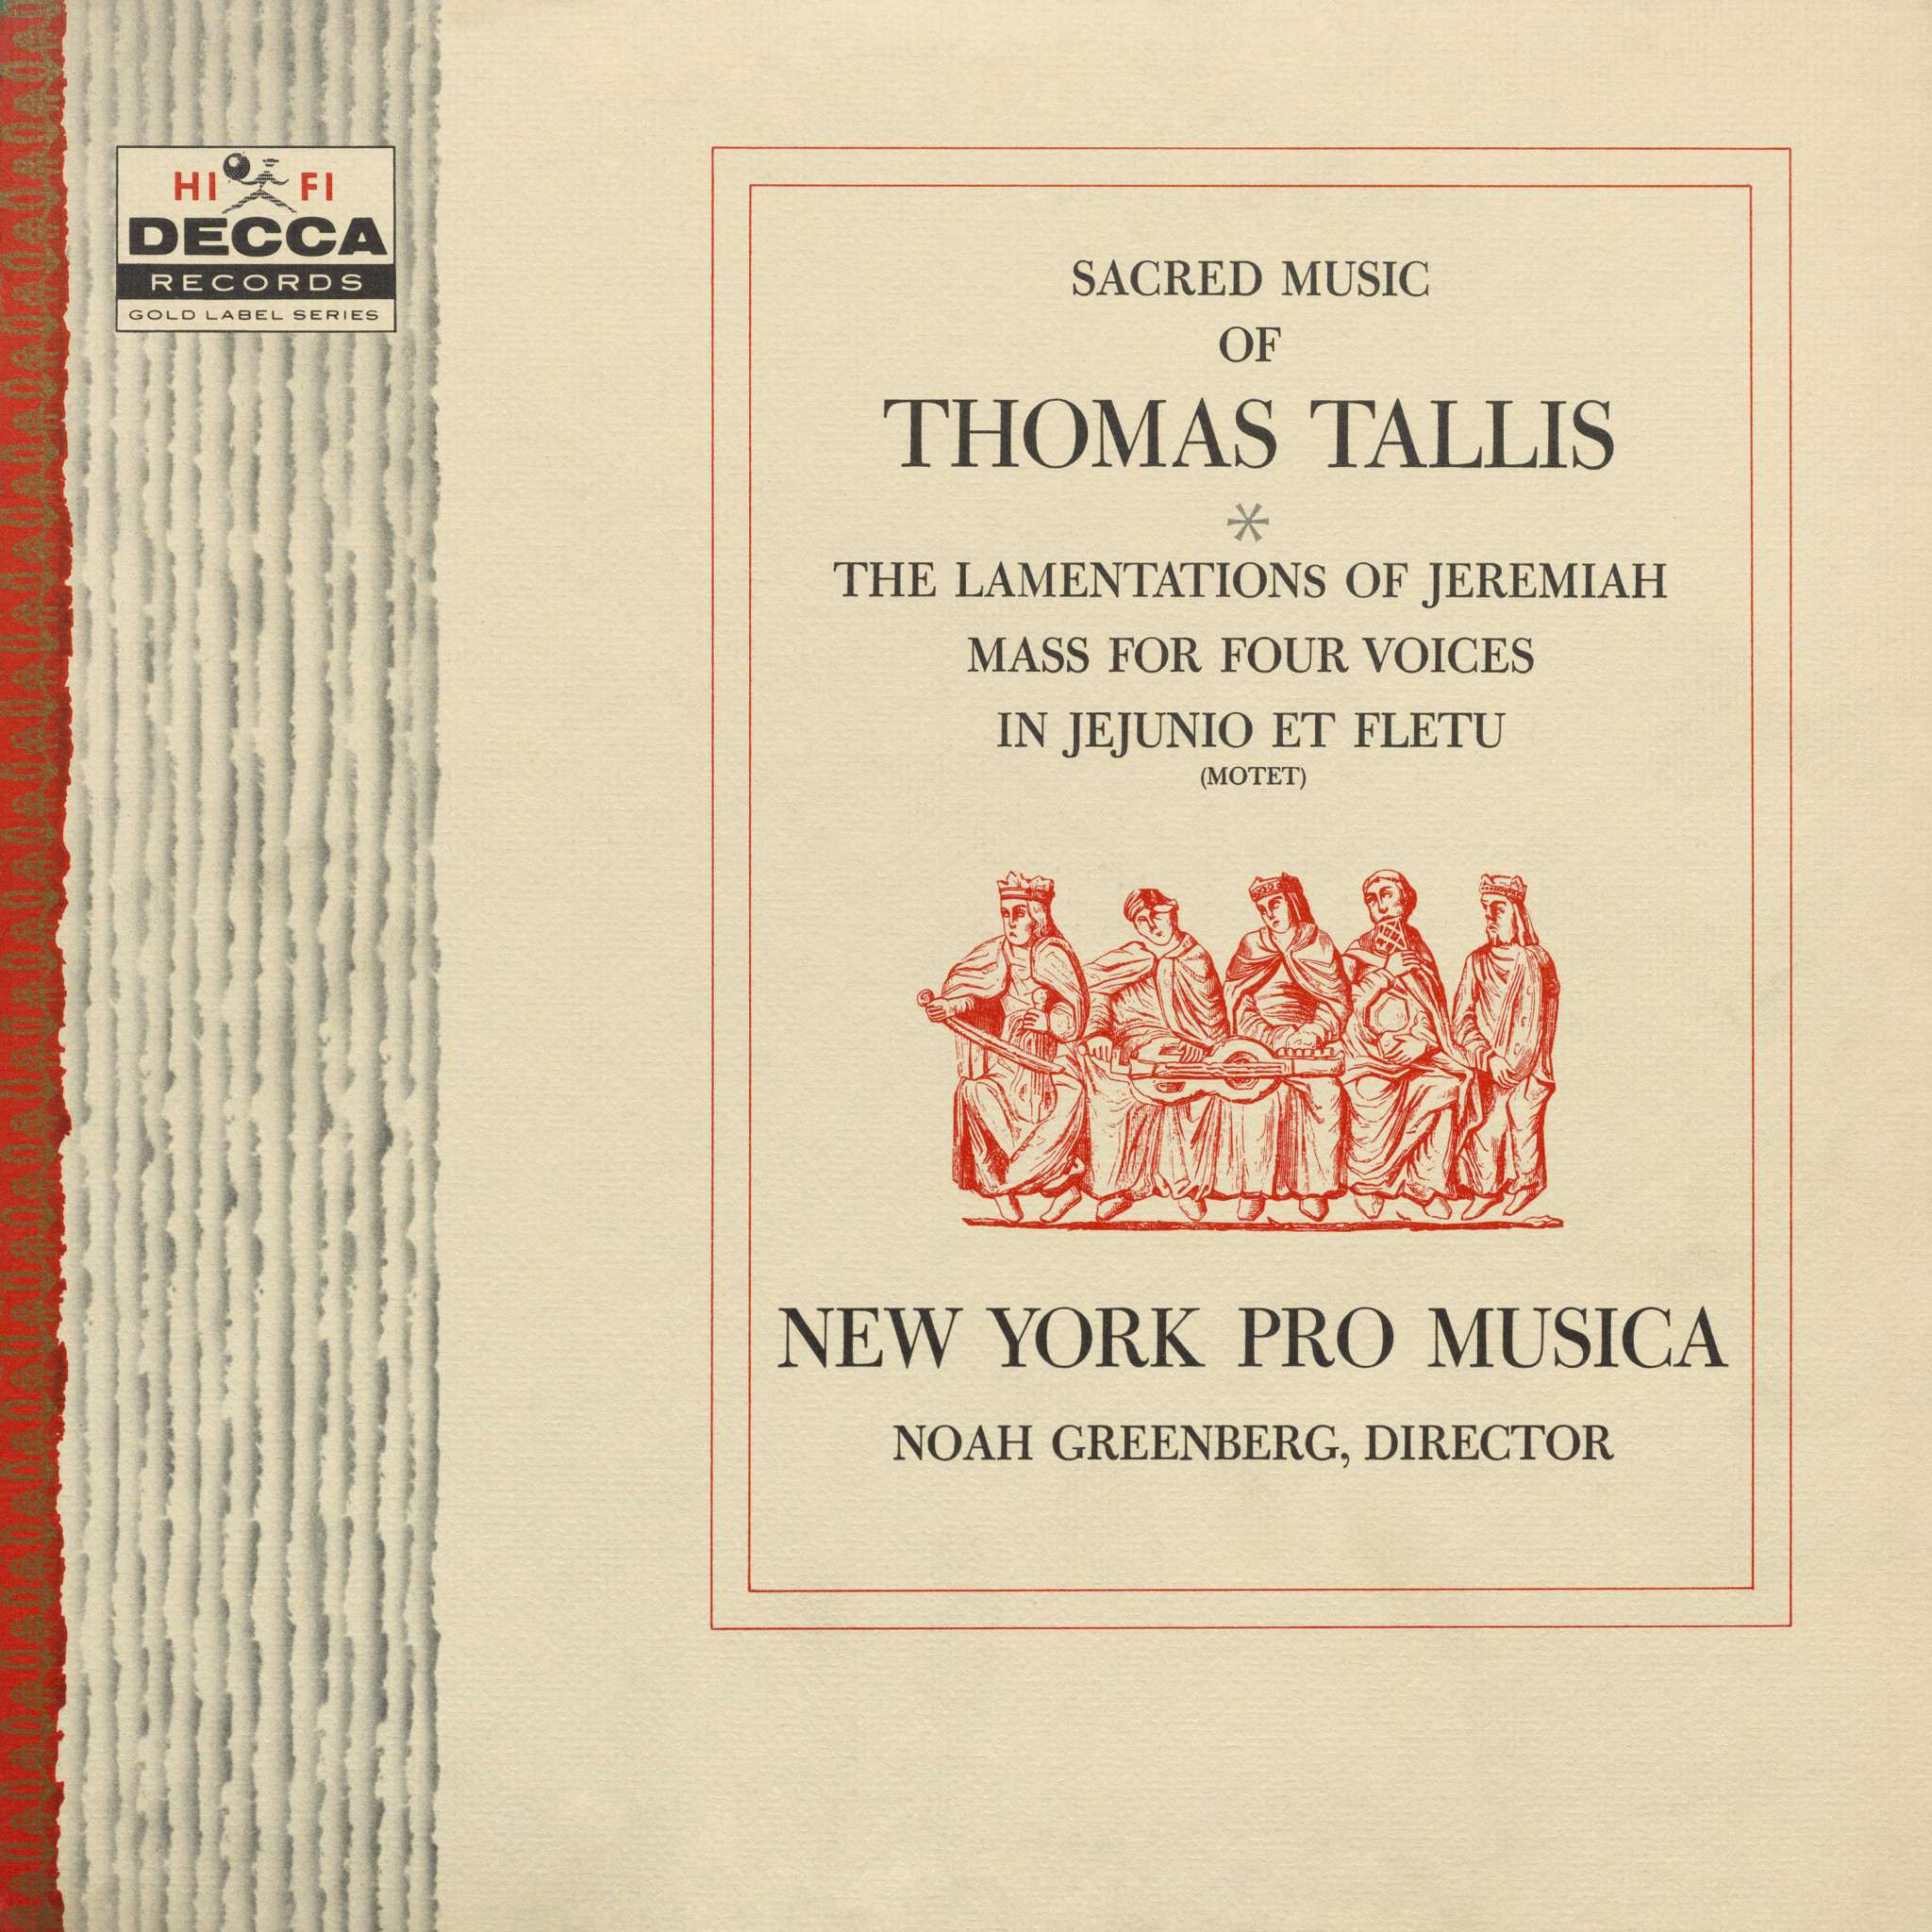 SACRED MUSIC OF THOMAS TALLIS